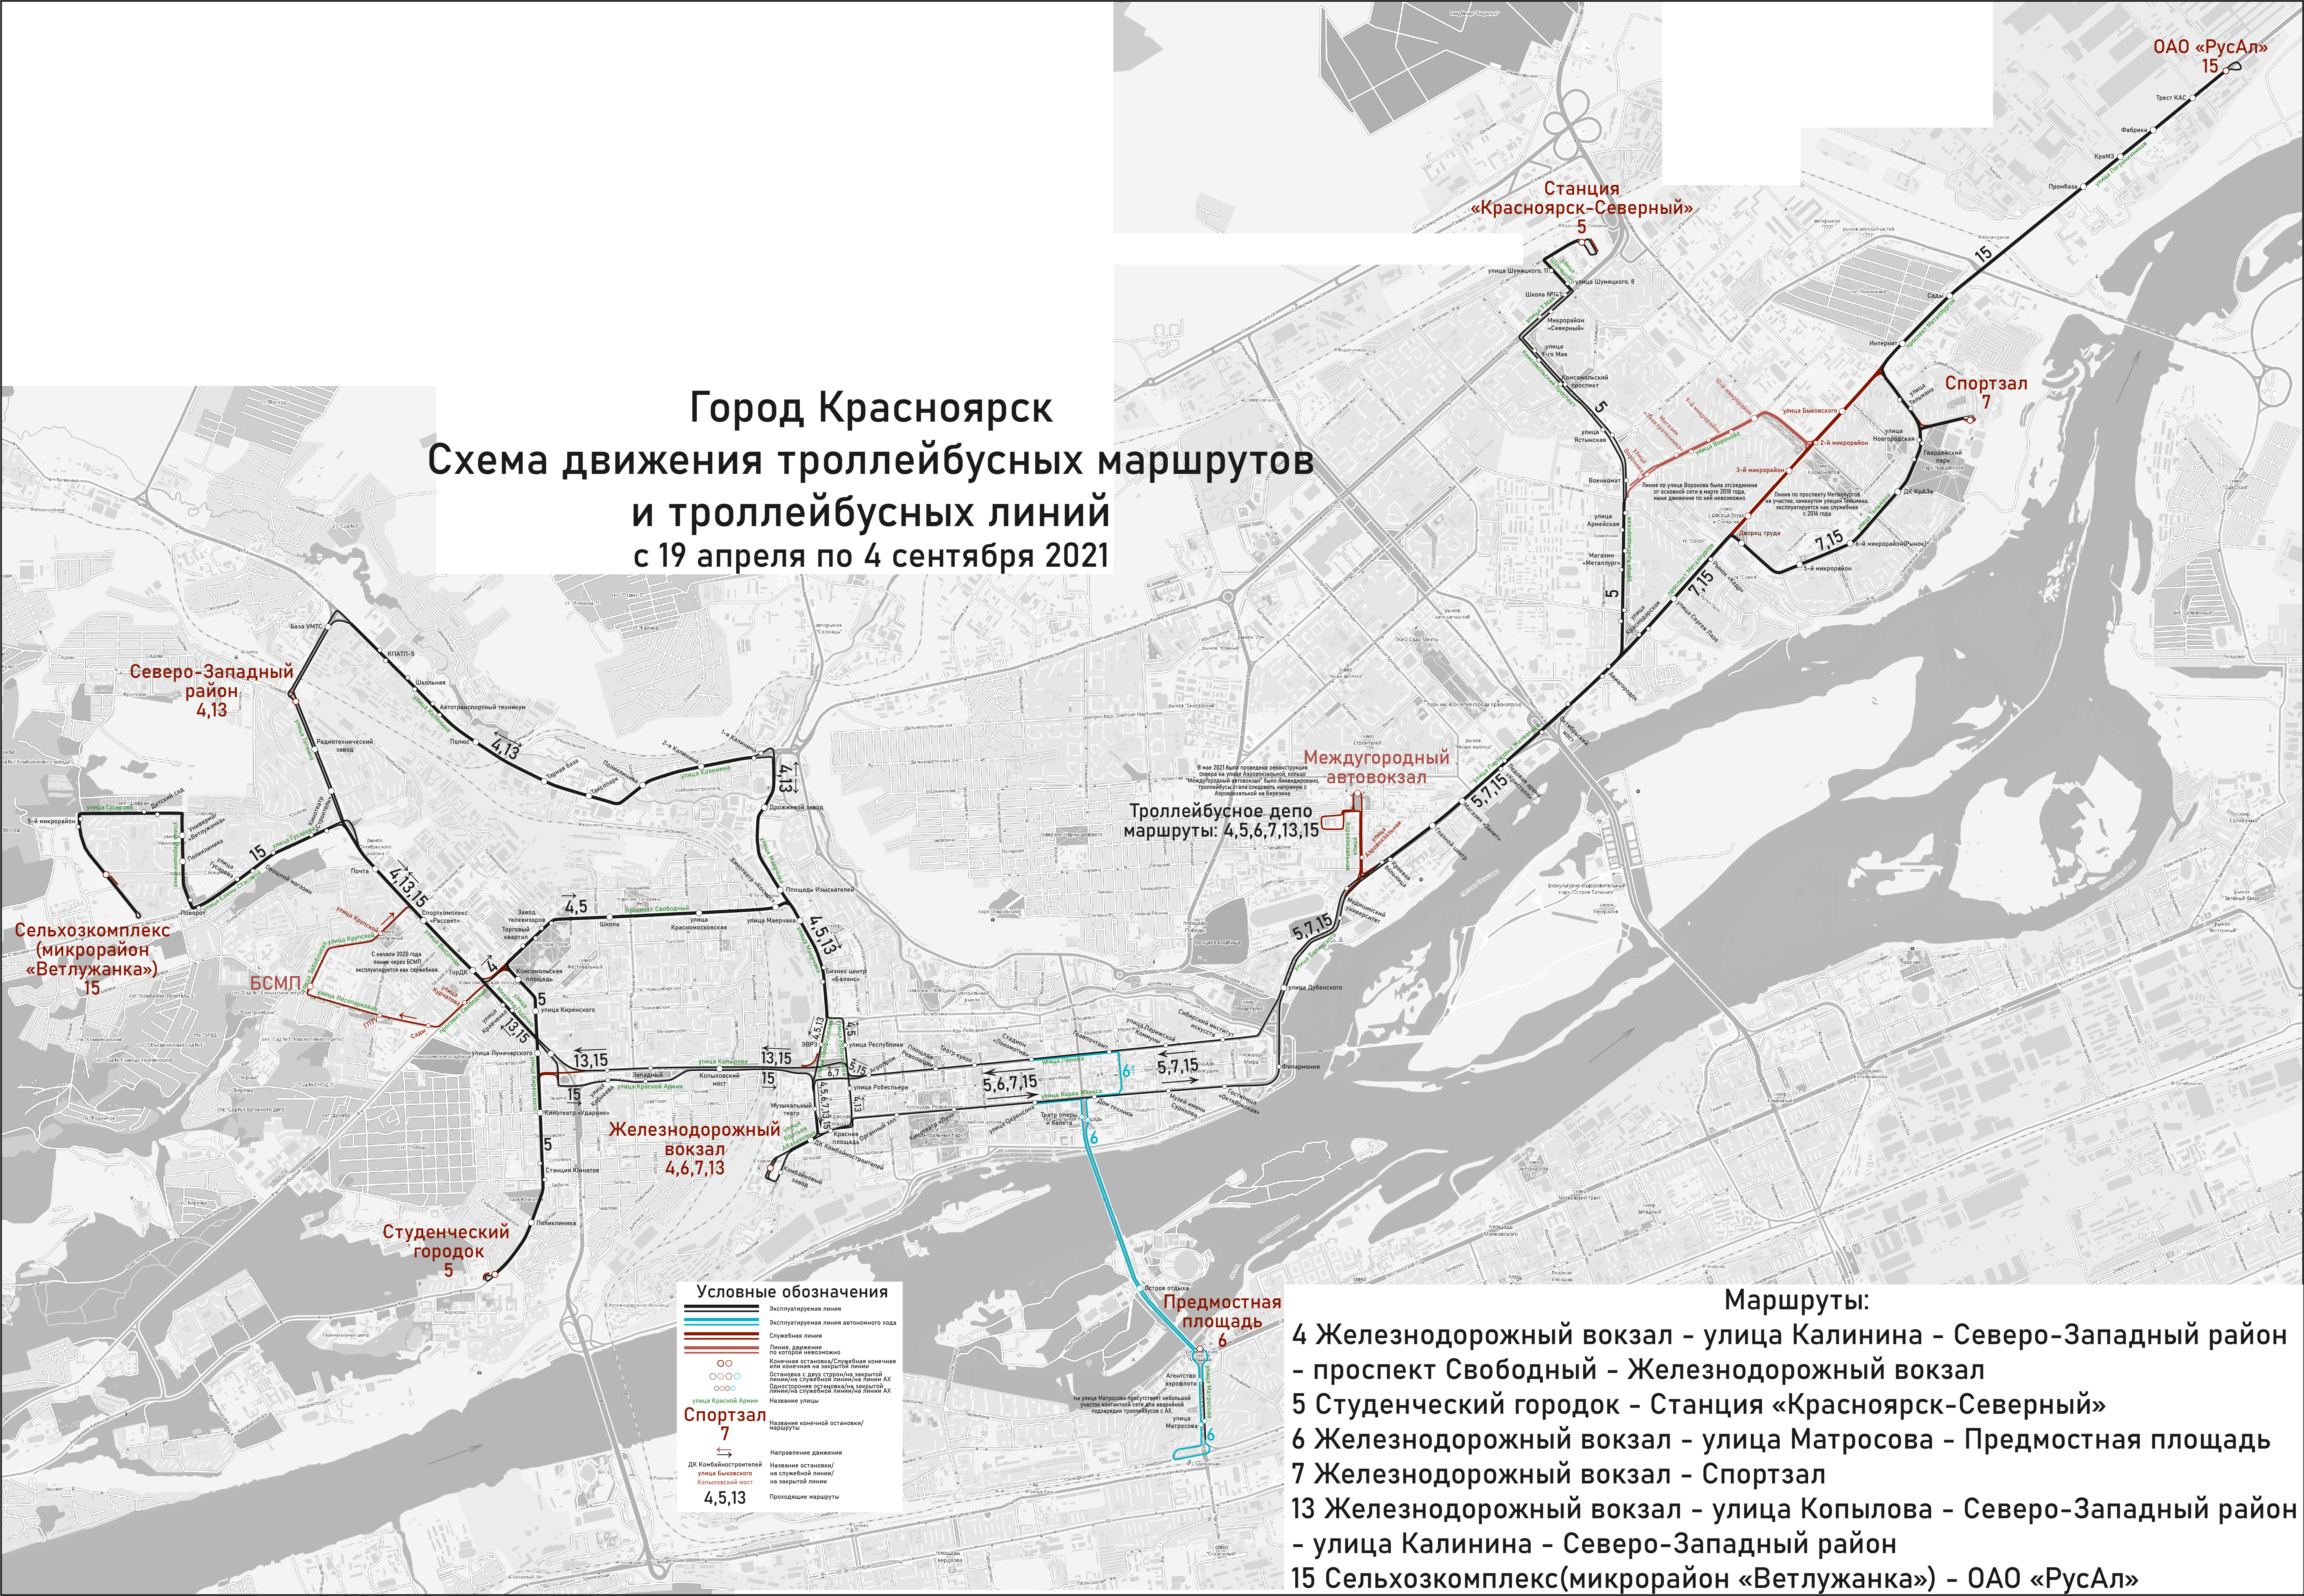 Krasnoyarsk — Maps